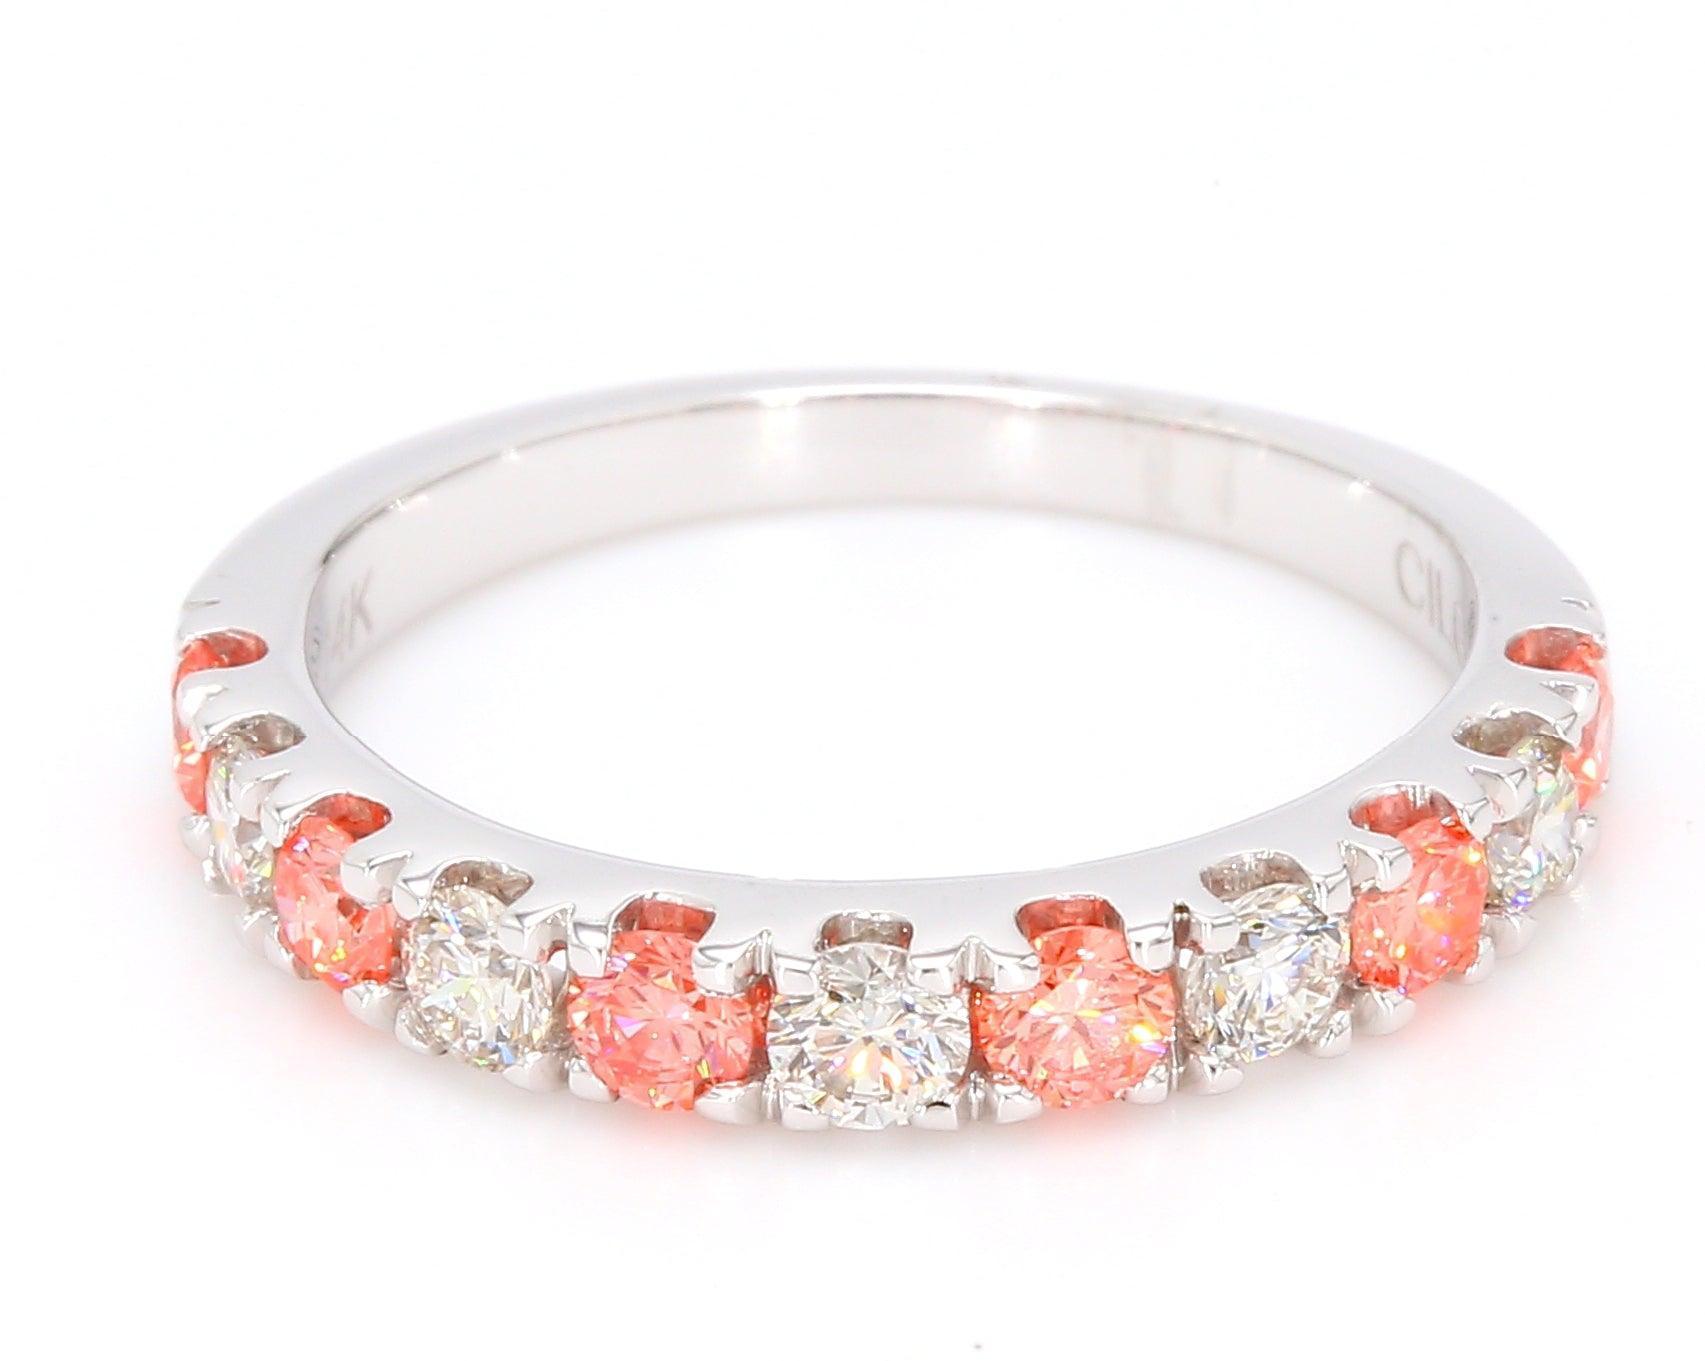 Amanda Ring - 1.00 Ct. T.W. Pink - New World Diamonds - Ring